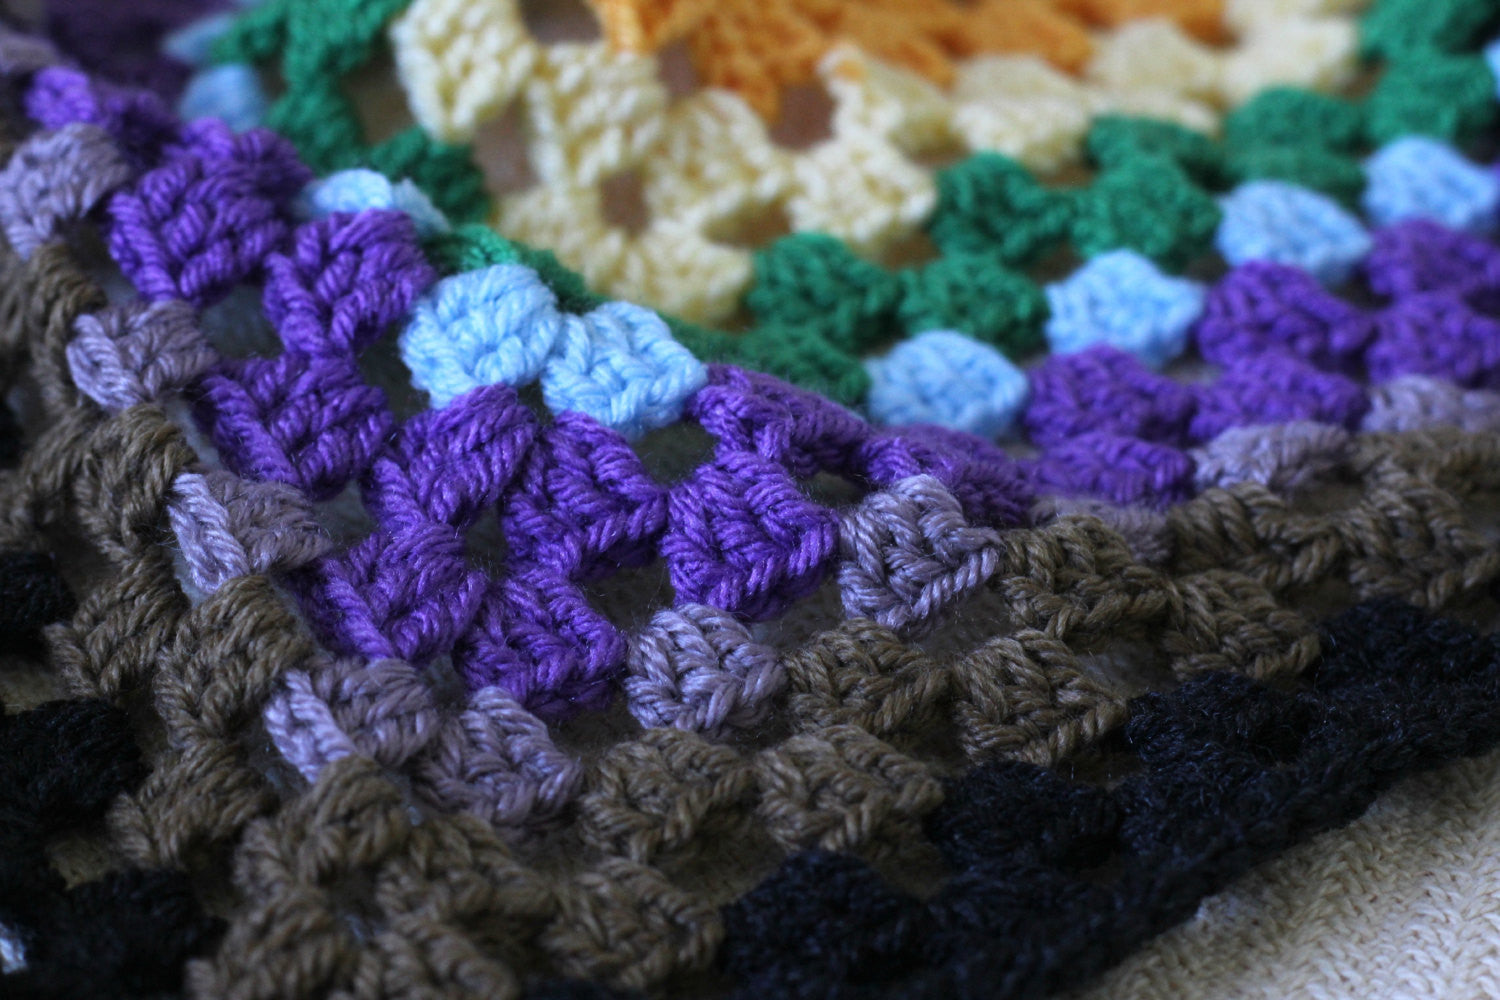 Crochet baby blanket with tassels in rainbow colors, newborn blanket, baby shower gift - KGThreads